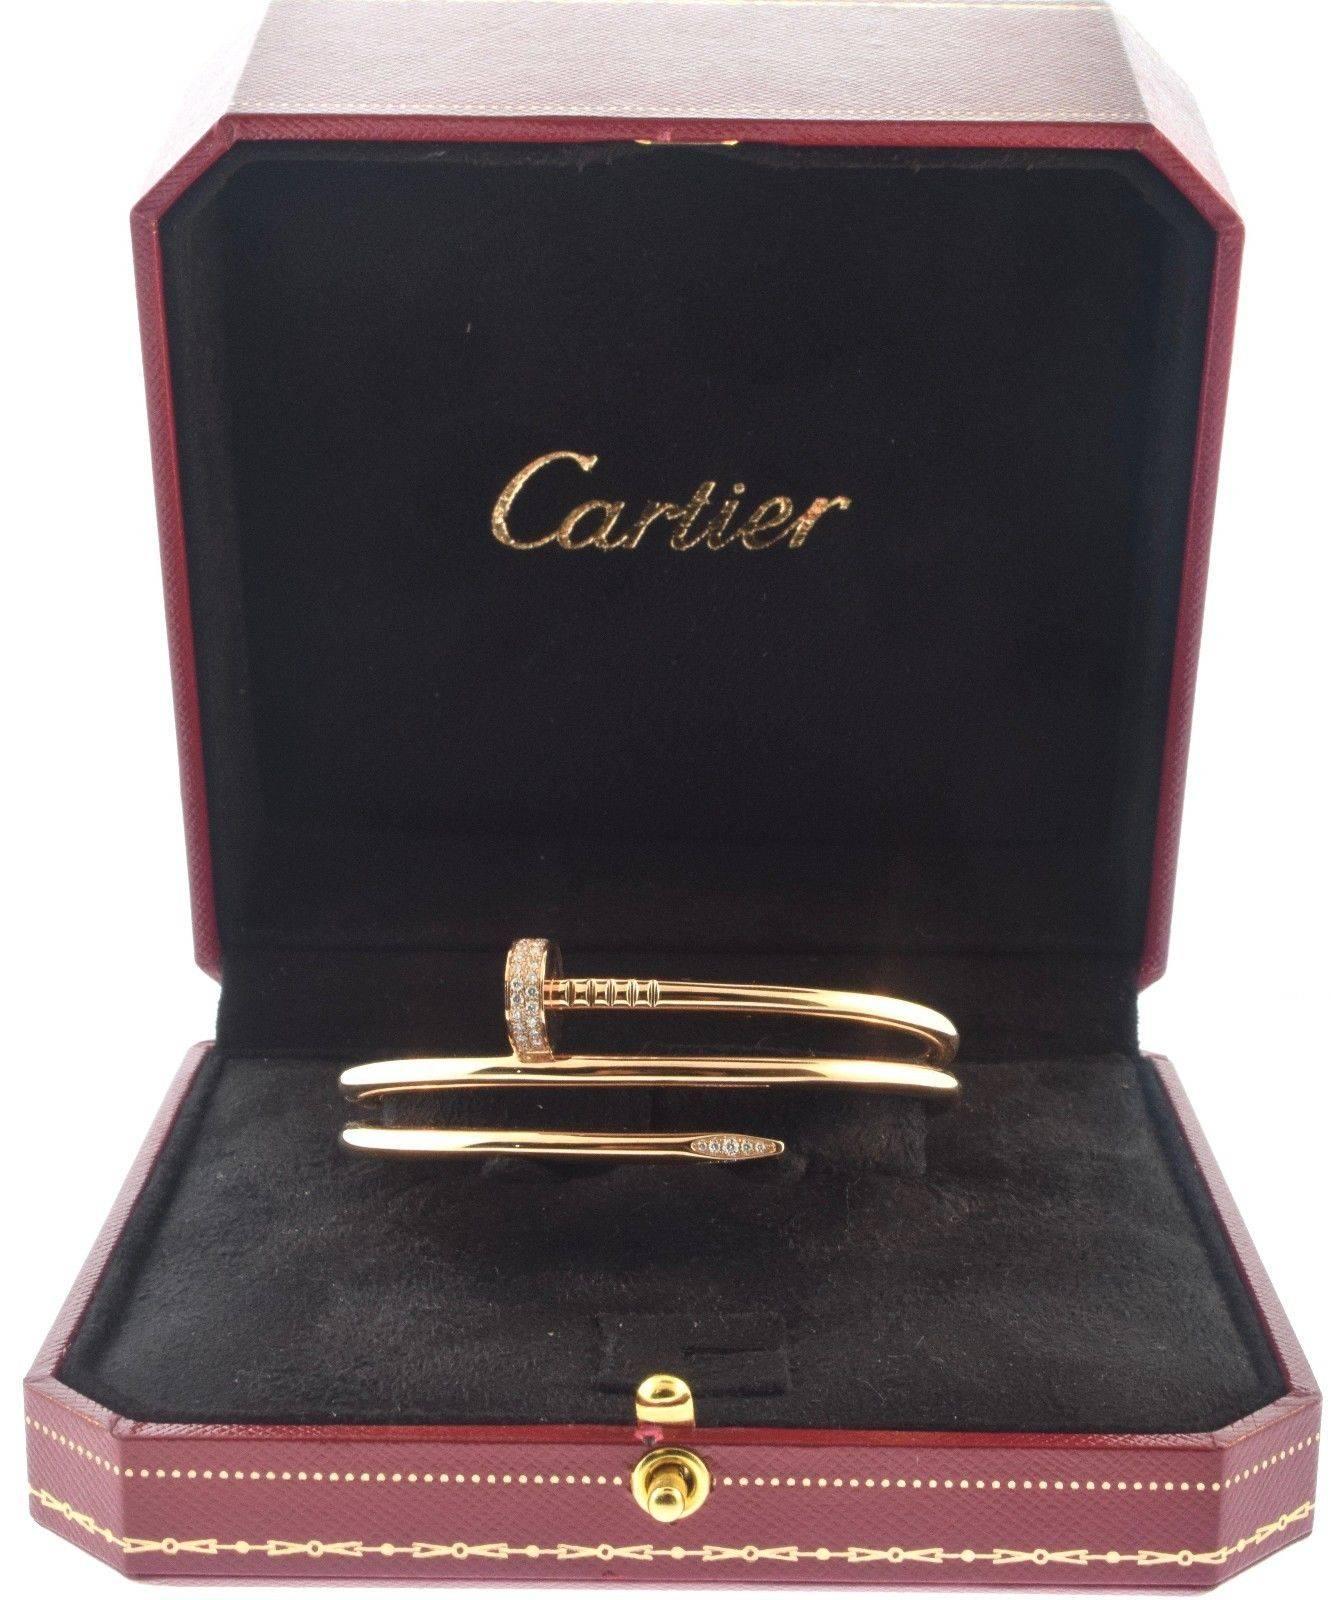  Cartier Juste Un Clou 18k Rose Gold Bracelet with Diamonds, Size 18 2